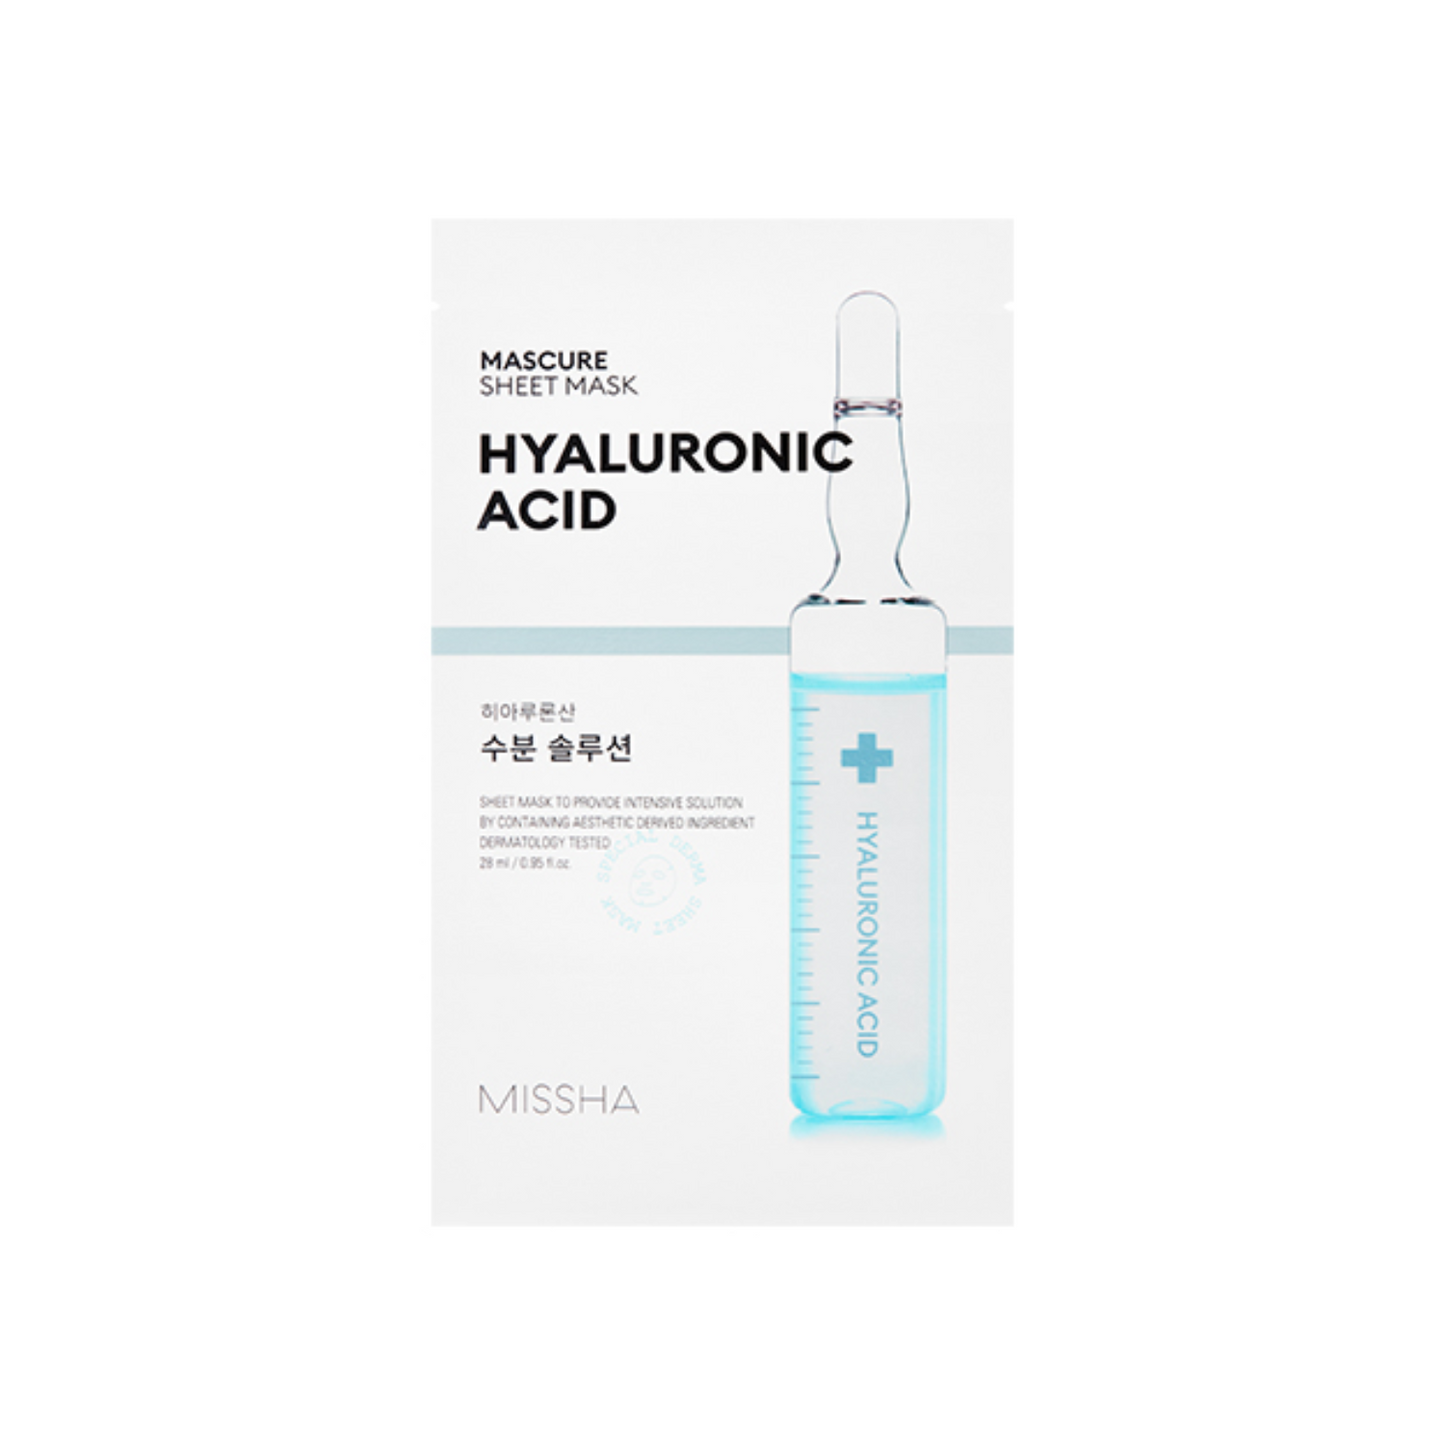 Missha Mascure Hydro Hyaluronic Sheet Mask